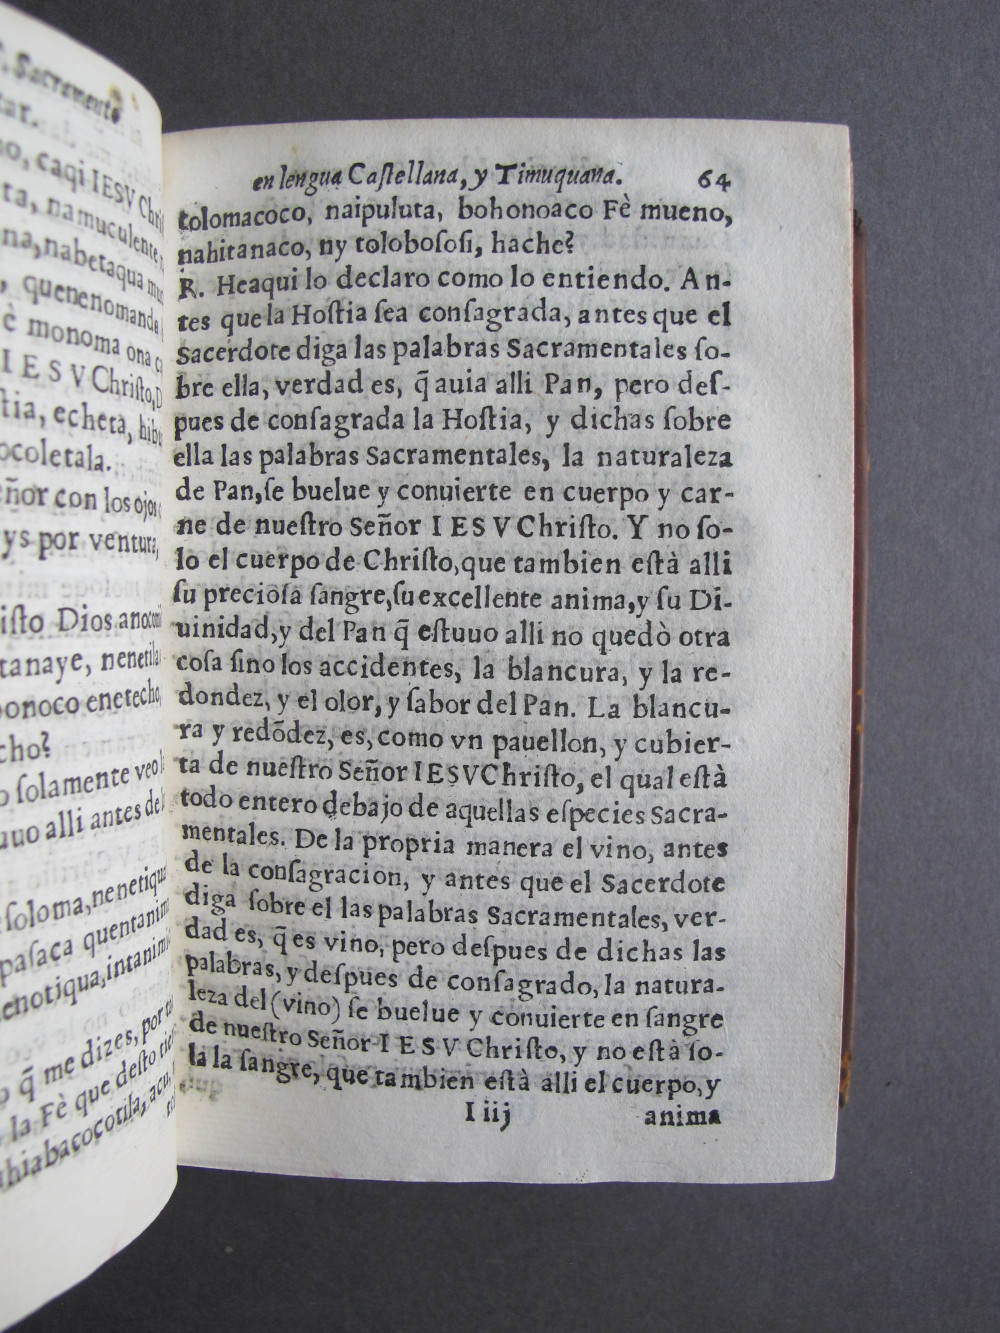 Folio I3 recto